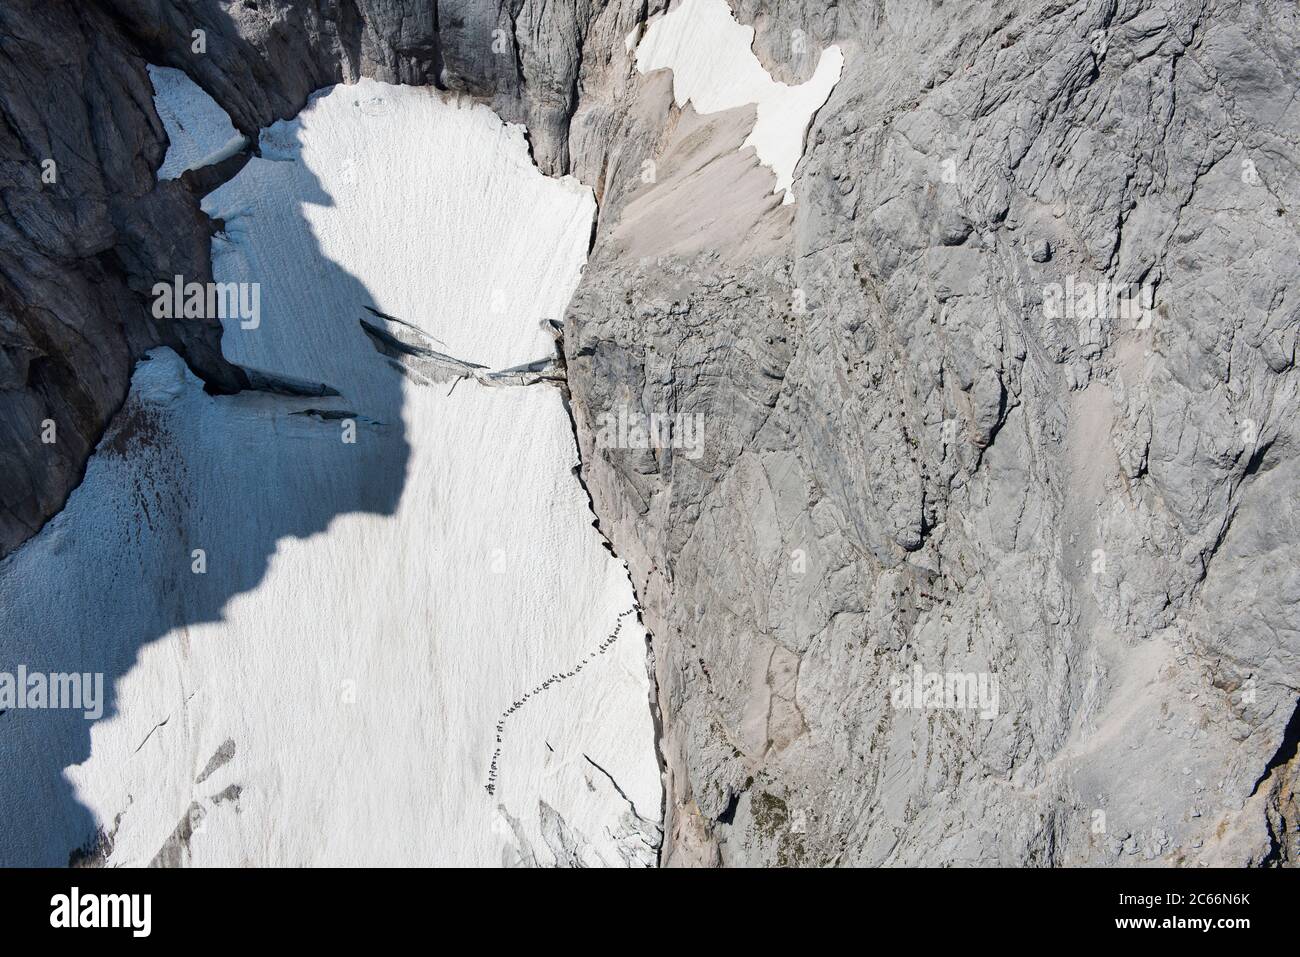 Mountaineers queuing up on Höllentalferner Glacier, aerial photograph, Wettersteingebirge, Bavaria, Germany Stock Photo